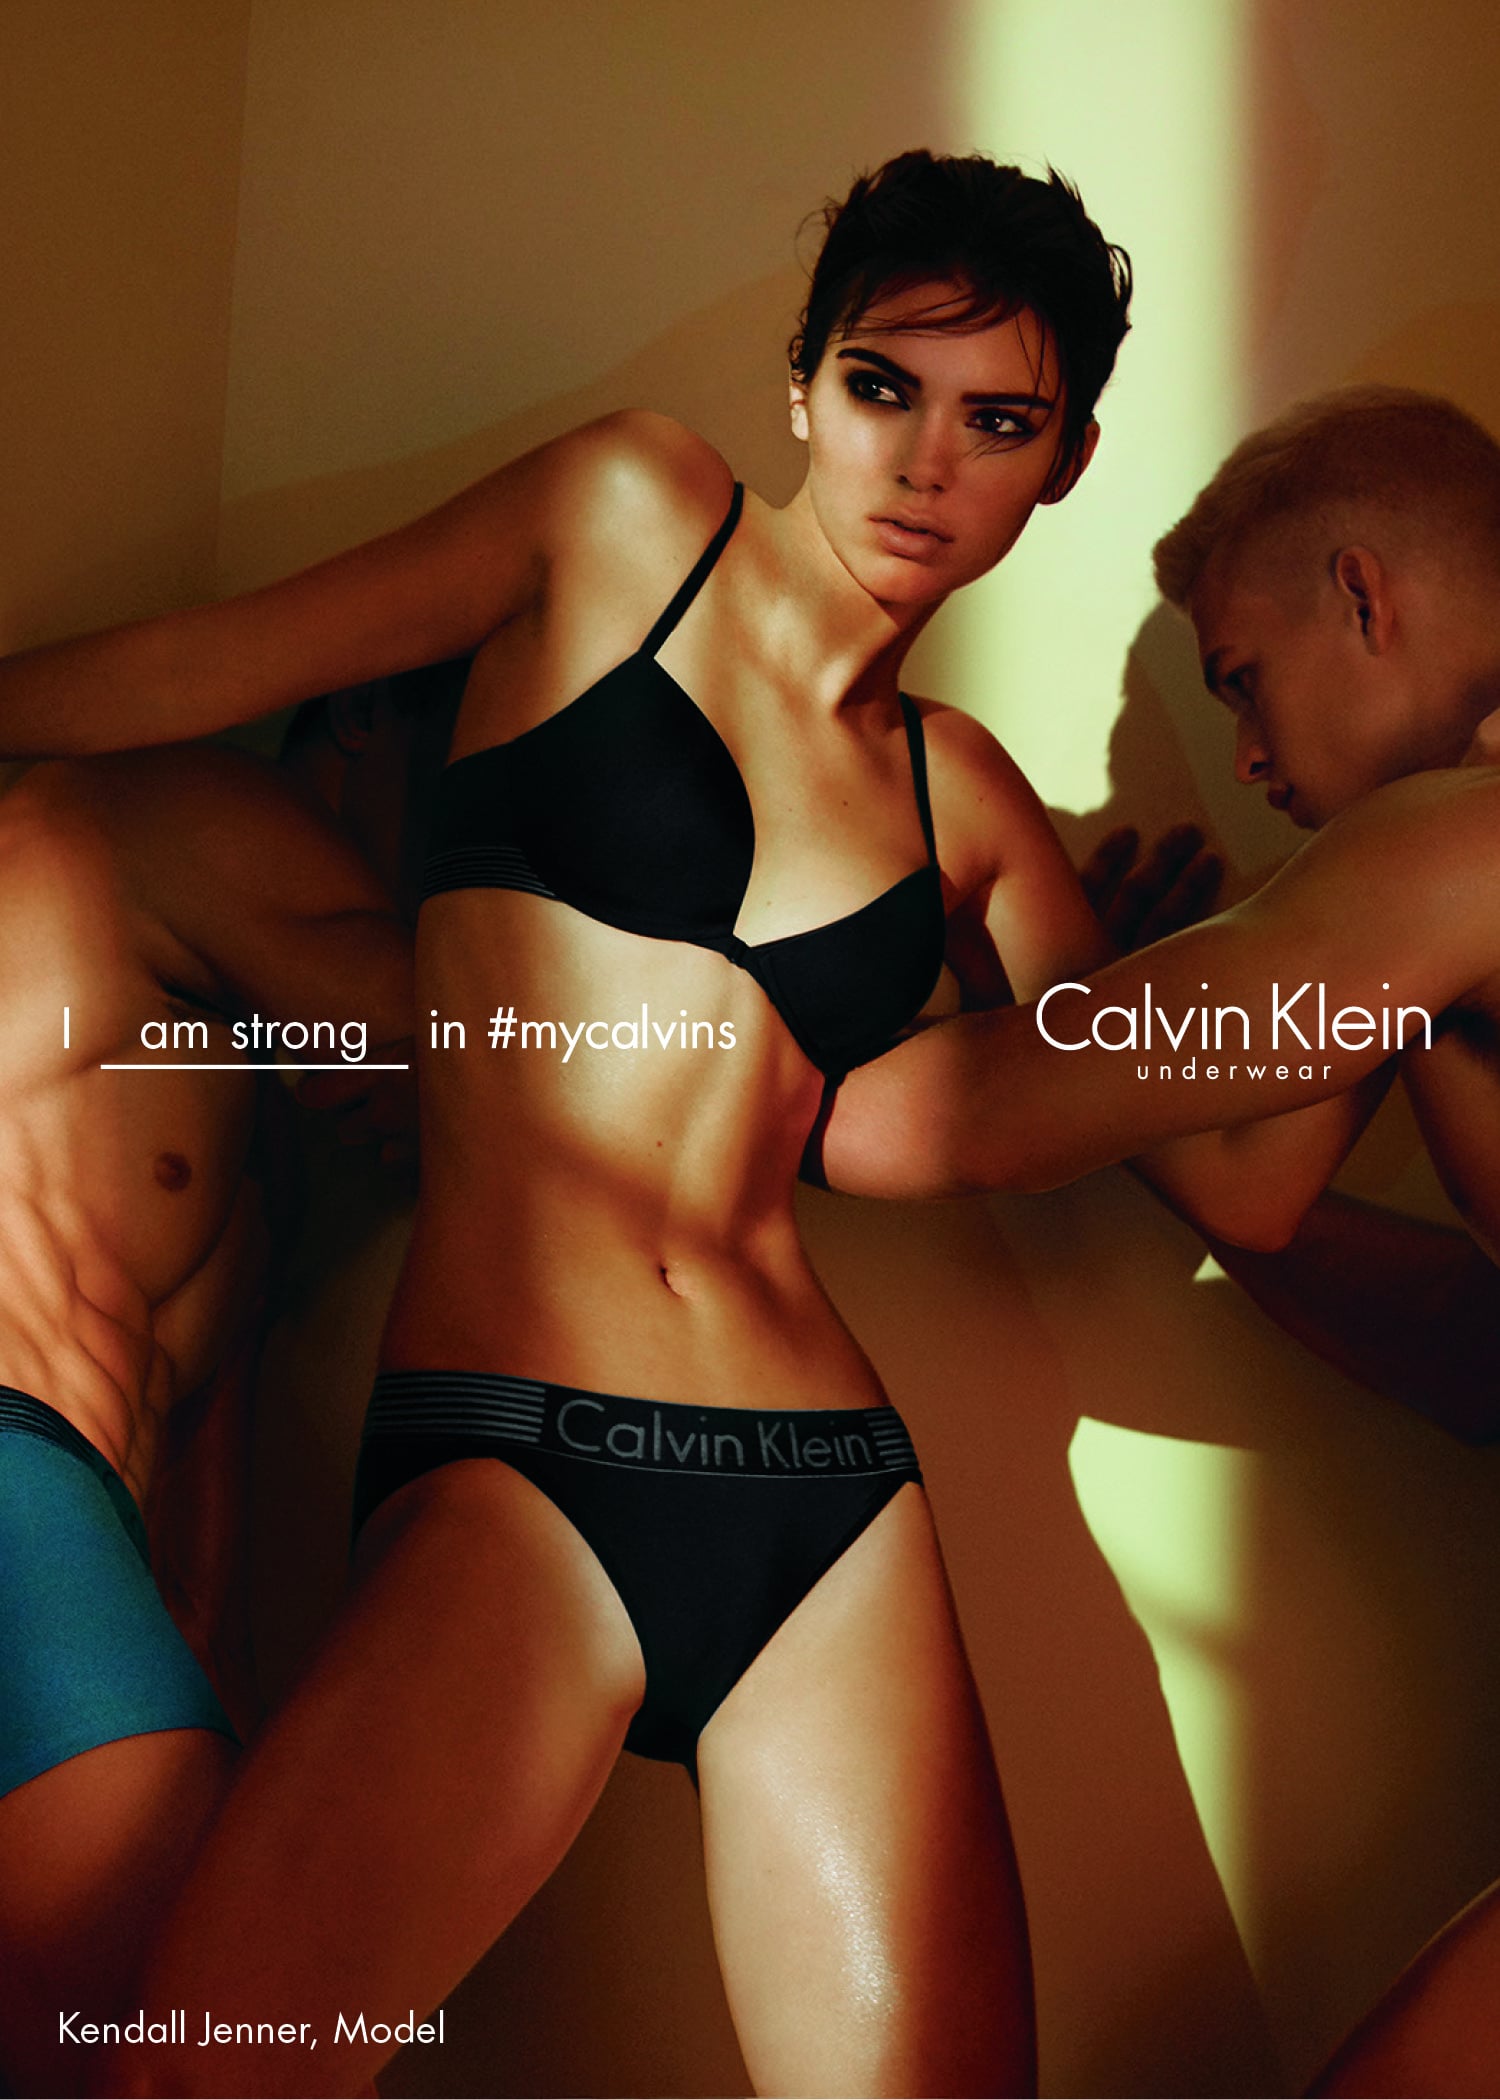 Kendall Jenner at Calvin Klein 